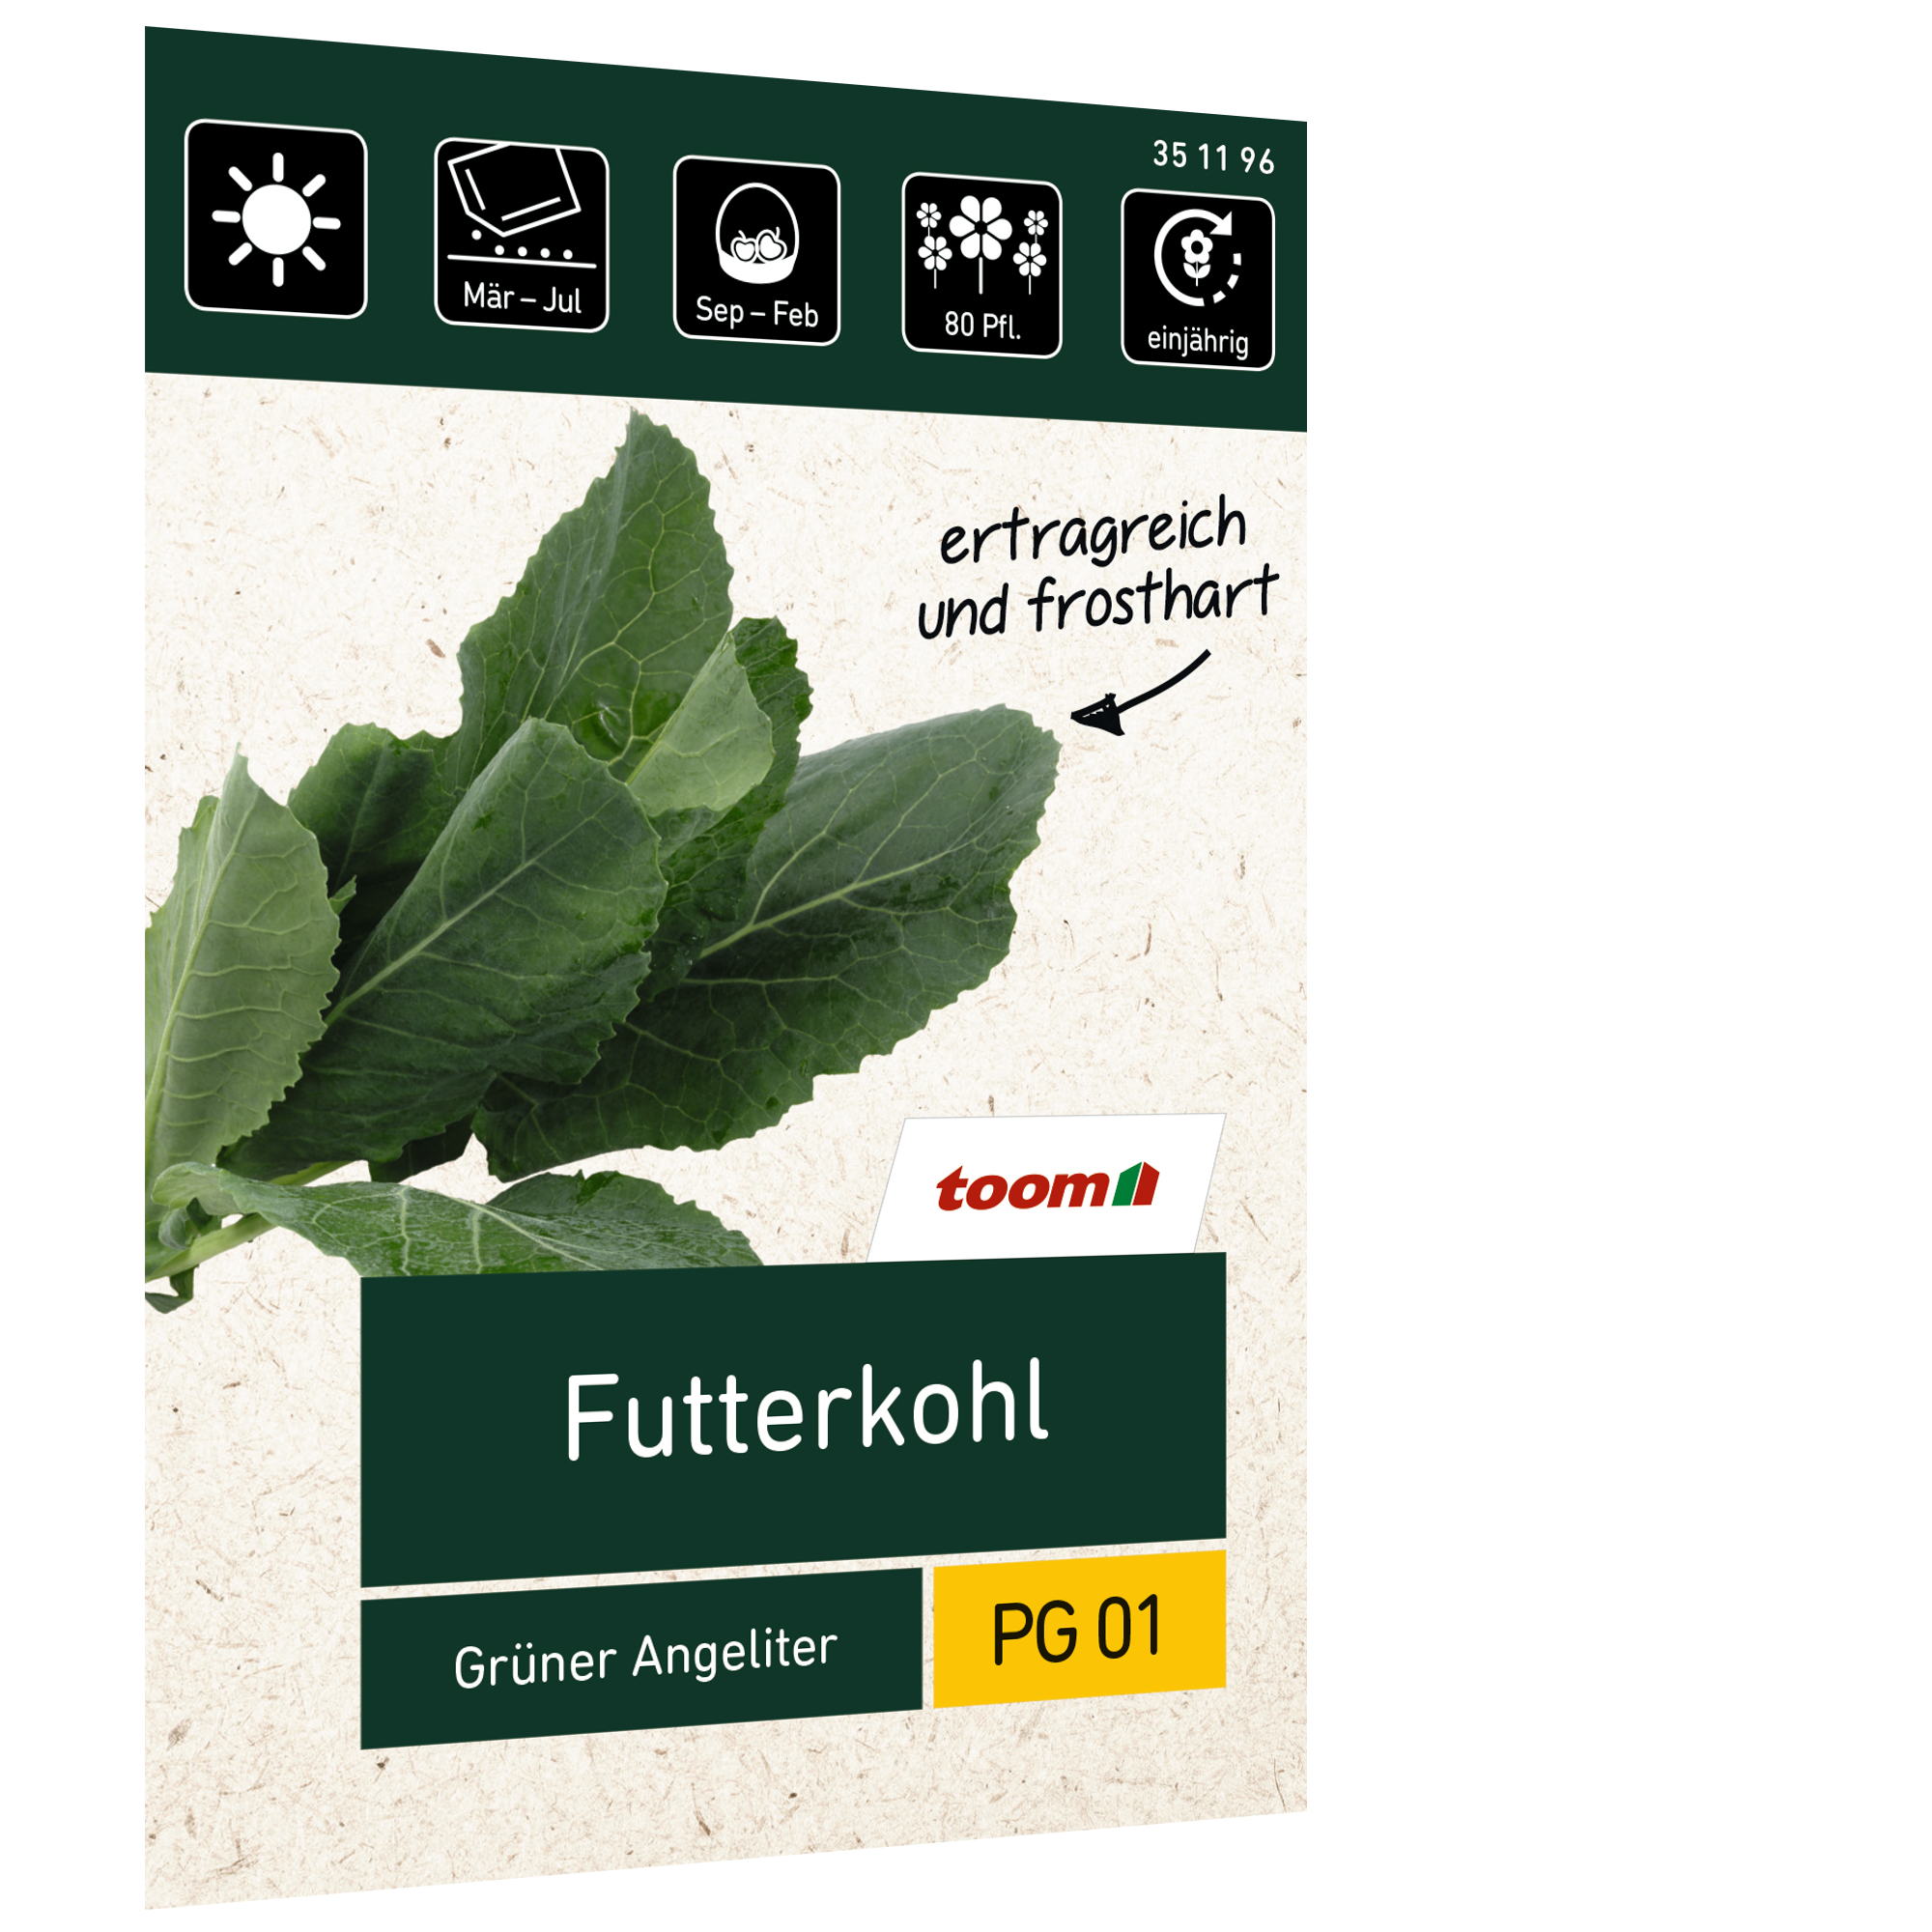 Futterkohl 'Grüner Angeliter' + product picture